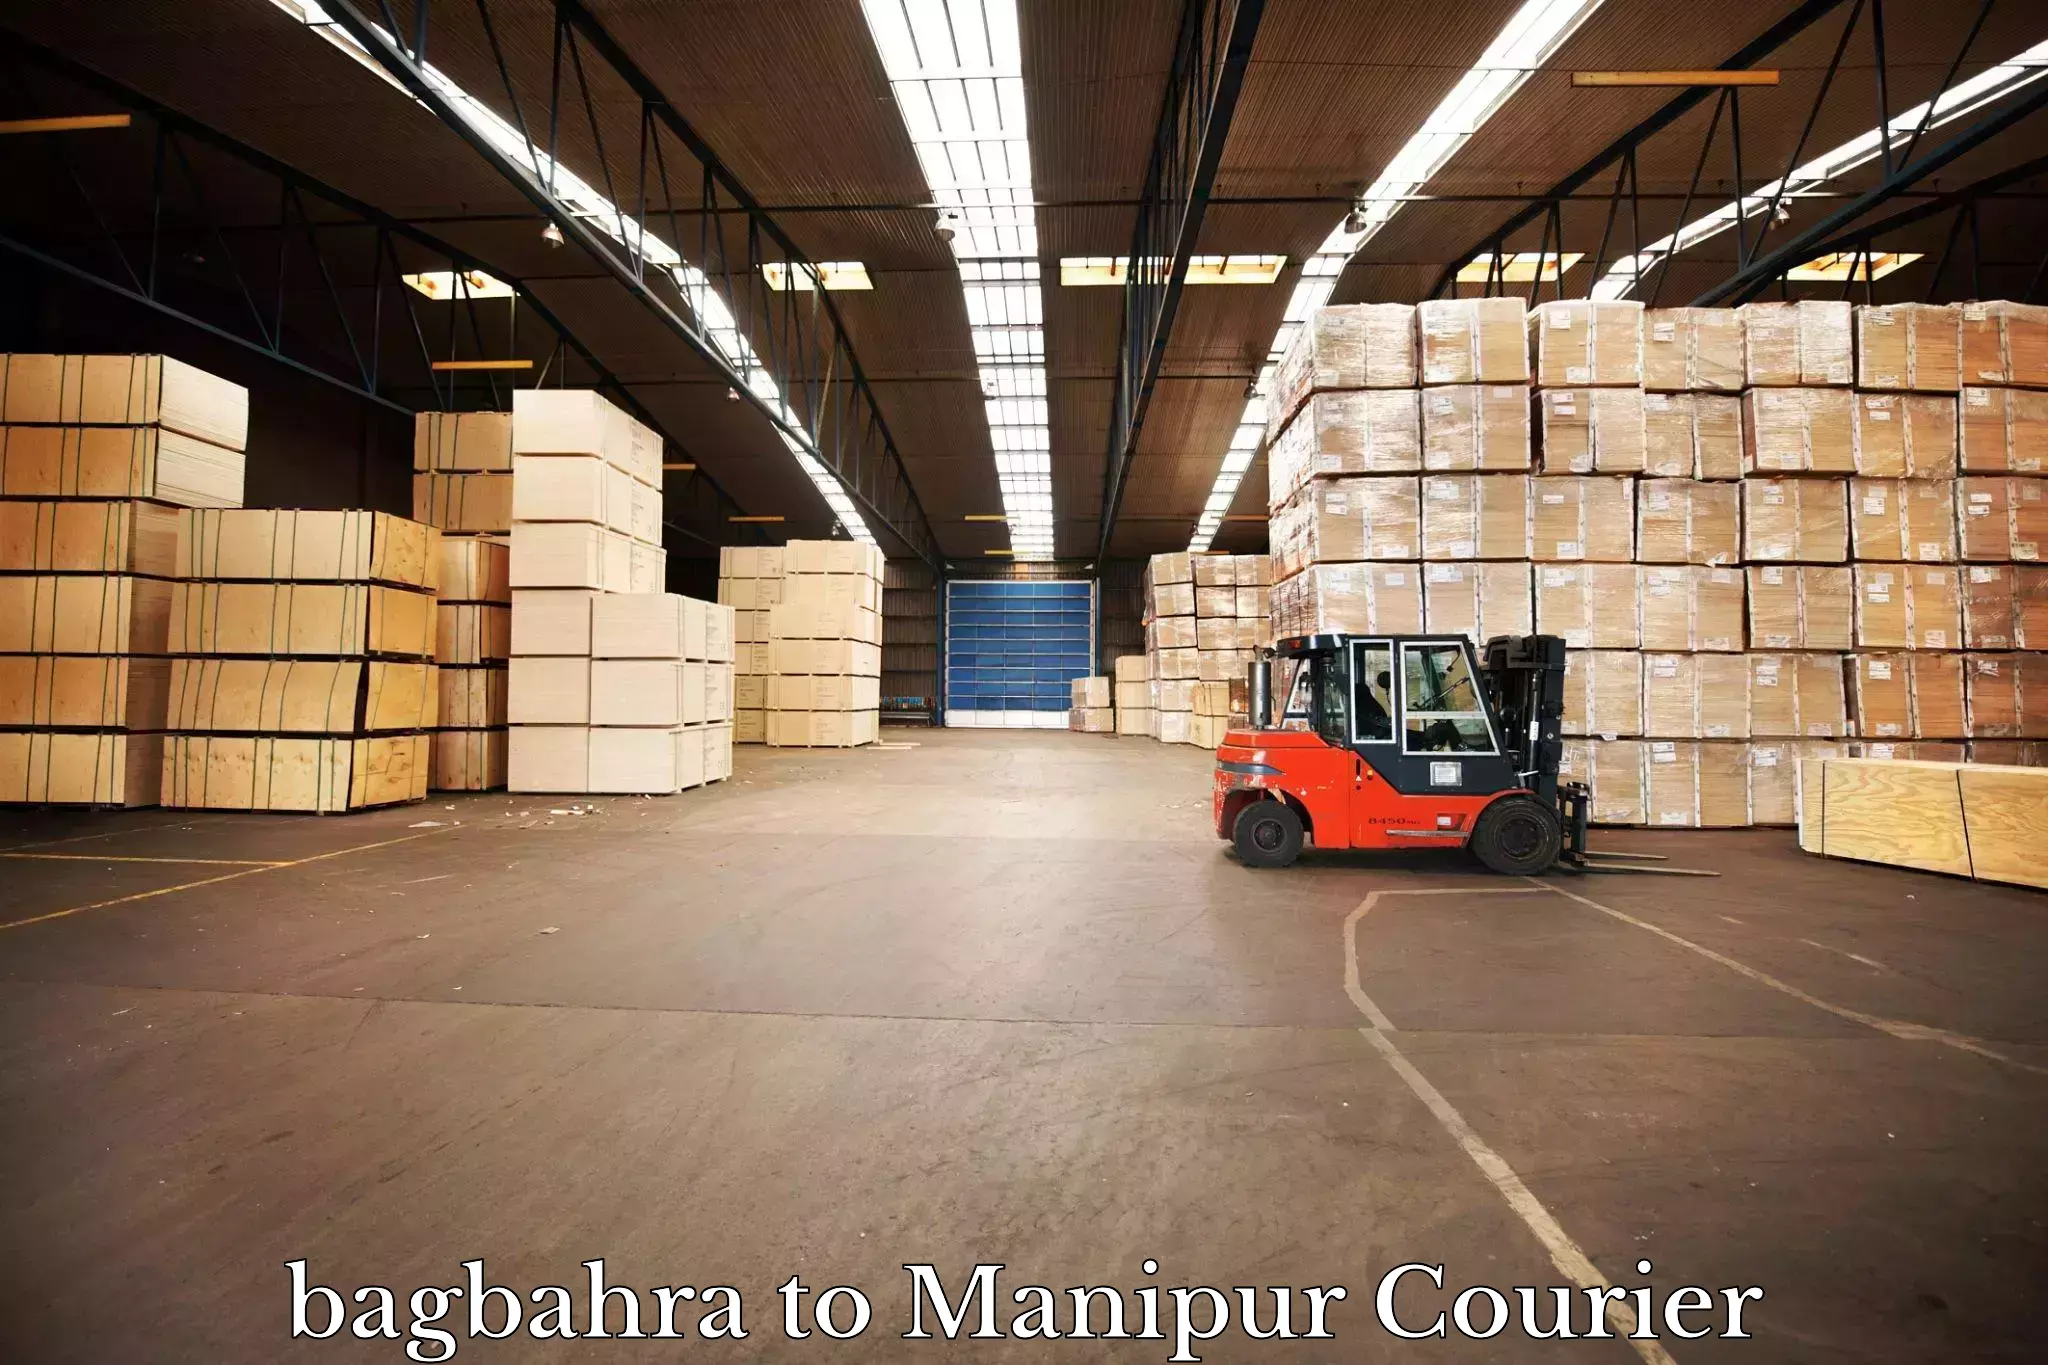 On-call courier service bagbahra to Churachandpur